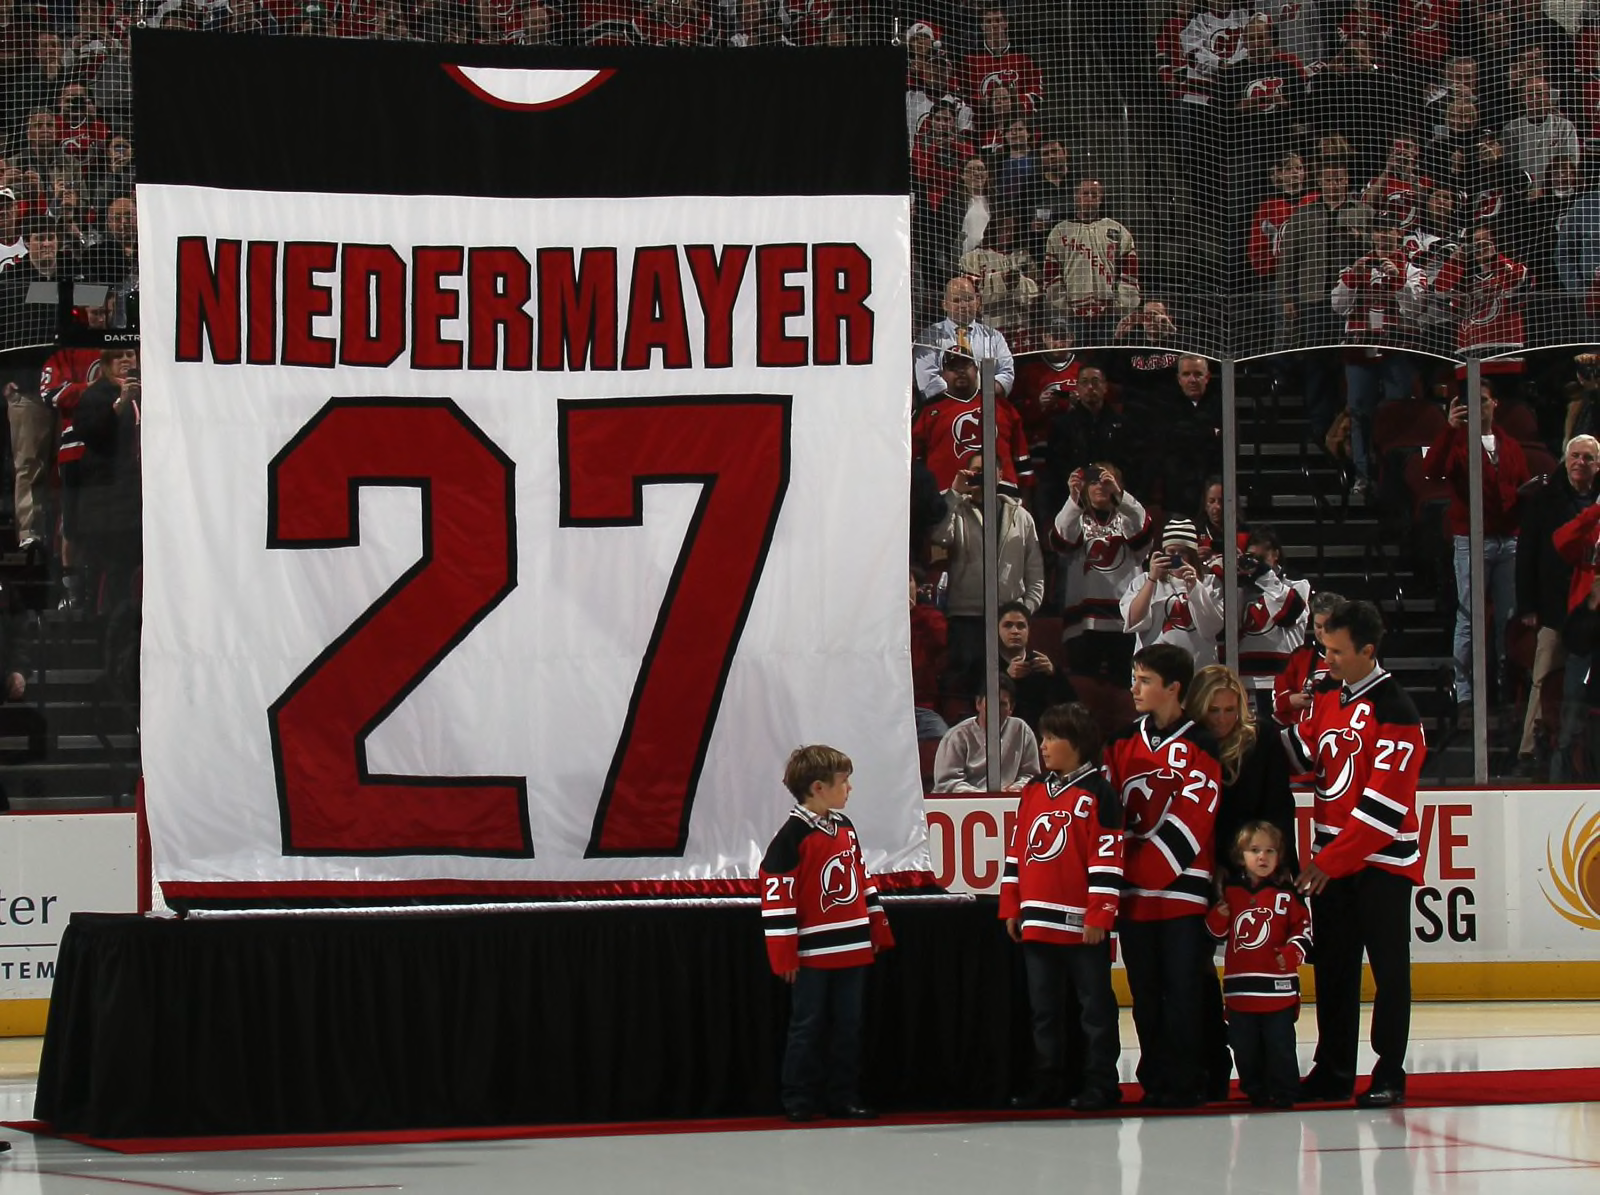 Scott Niedermayer's Jersey Is Retired by Devils - The New York Times